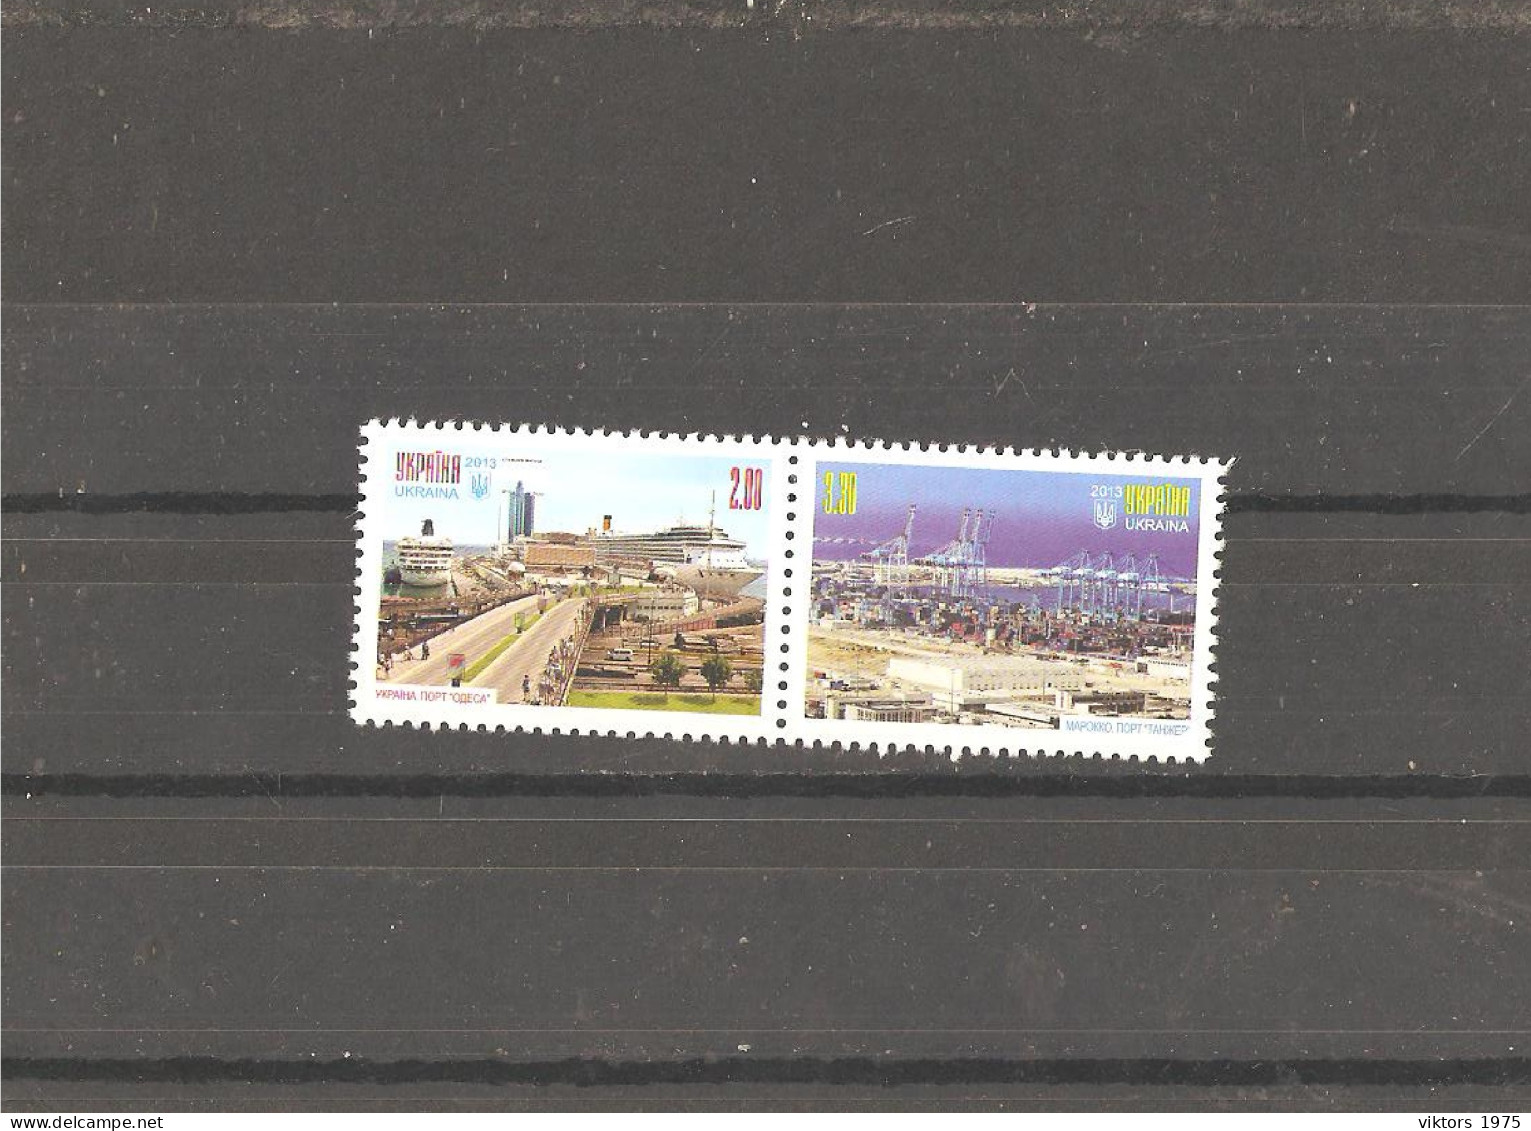 MNH Stamps Nr.1380-1381 In MICHEL Catalog - Ukraine